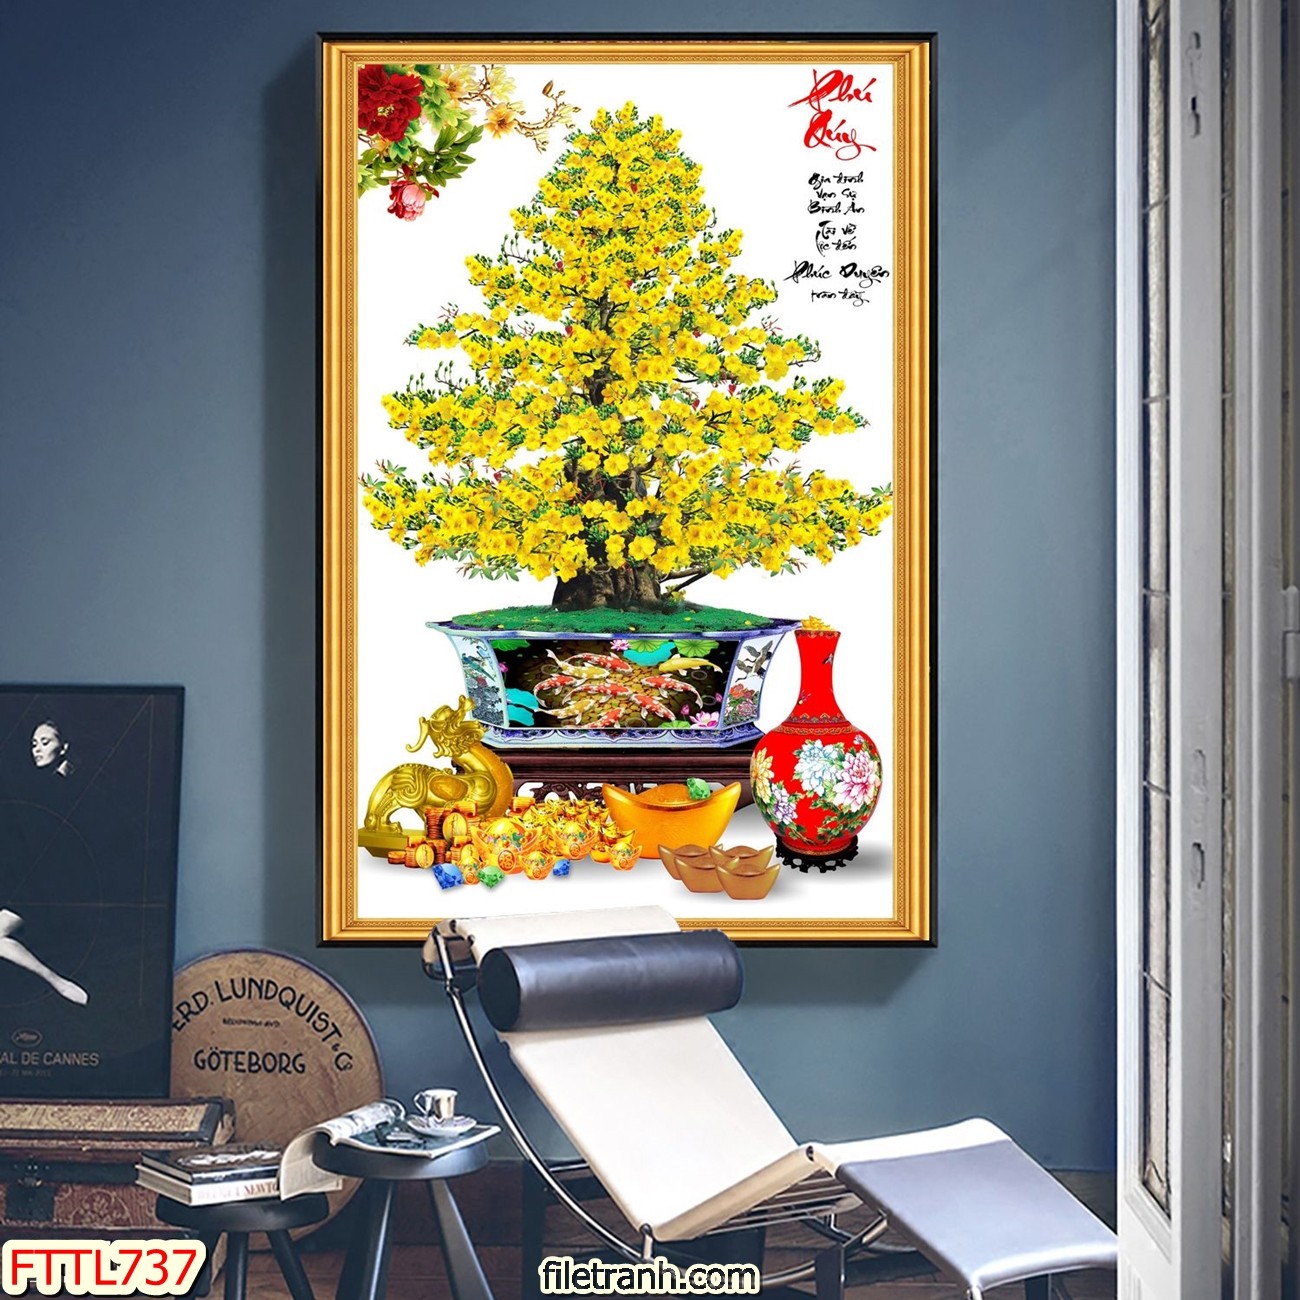 https://filetranh.com/file-tranh-chau-mai-bonsai/file-tranh-chau-mai-bonsai-fttl737.html